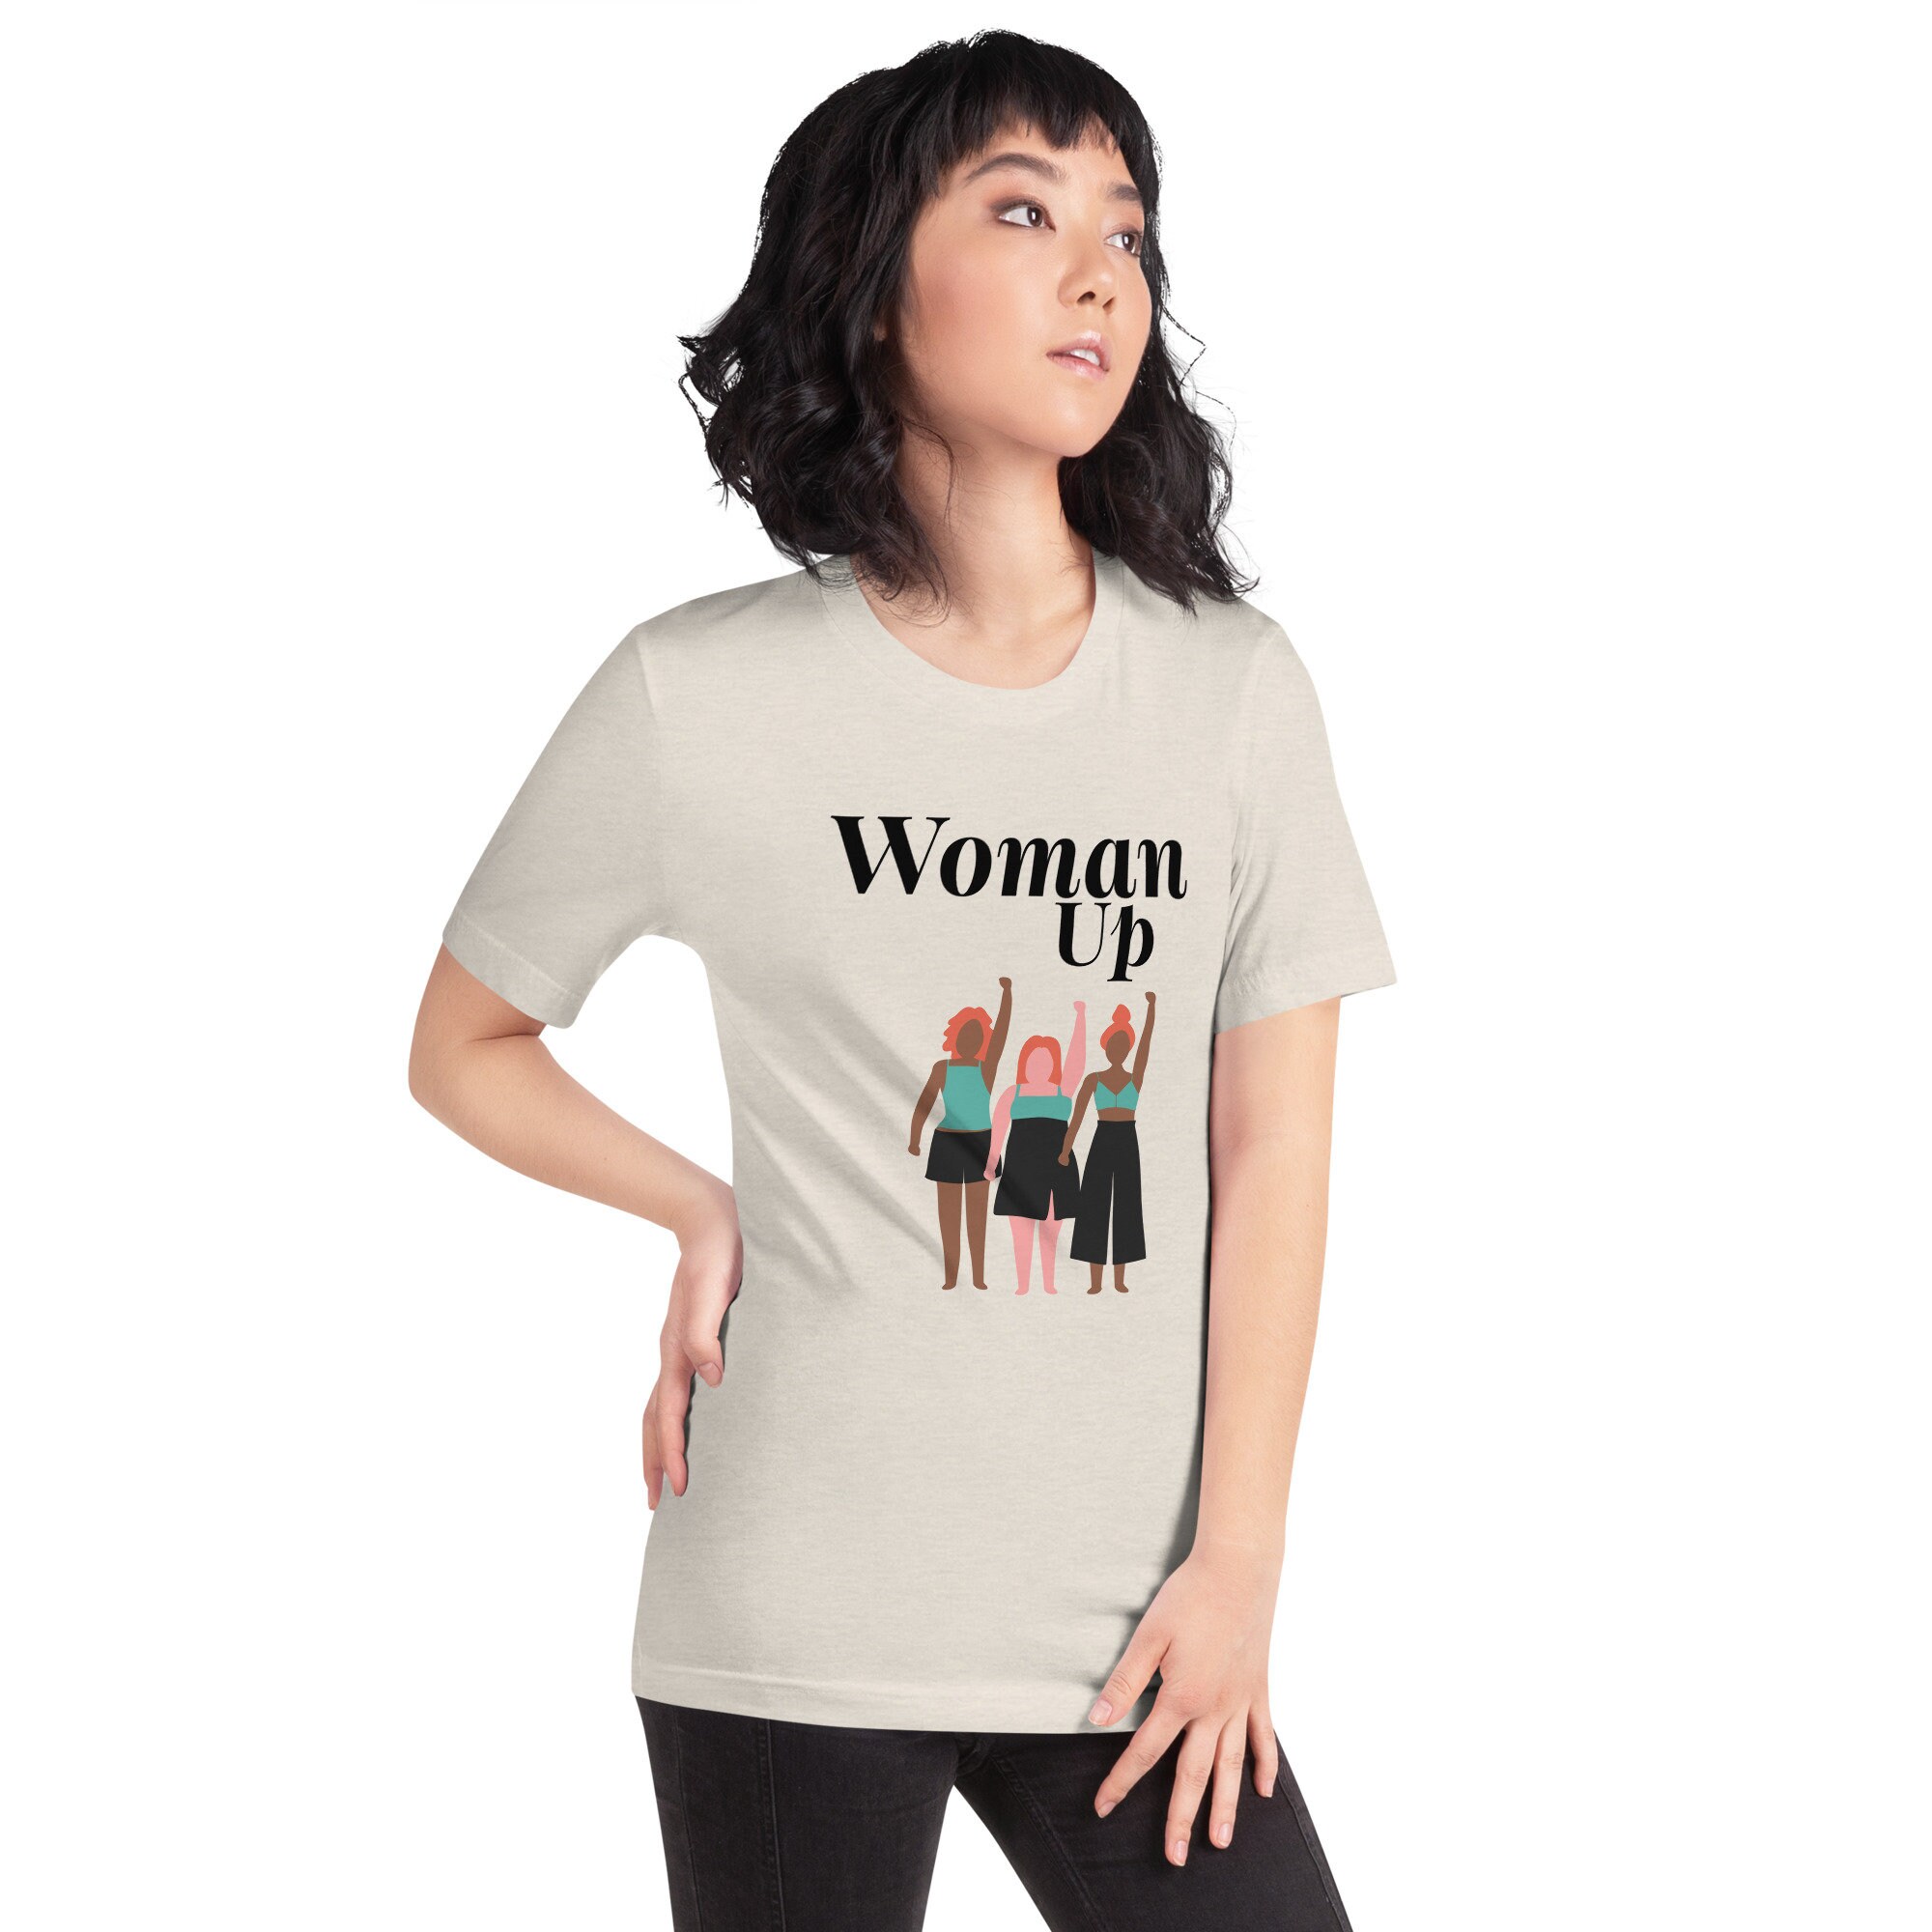 Discover Woman Up Shirt, Woman Up T Shirt, Feminist Shirt, Perfect gift for her, gift for best friend, Empower her, Inspirational Shirt, Strong Women